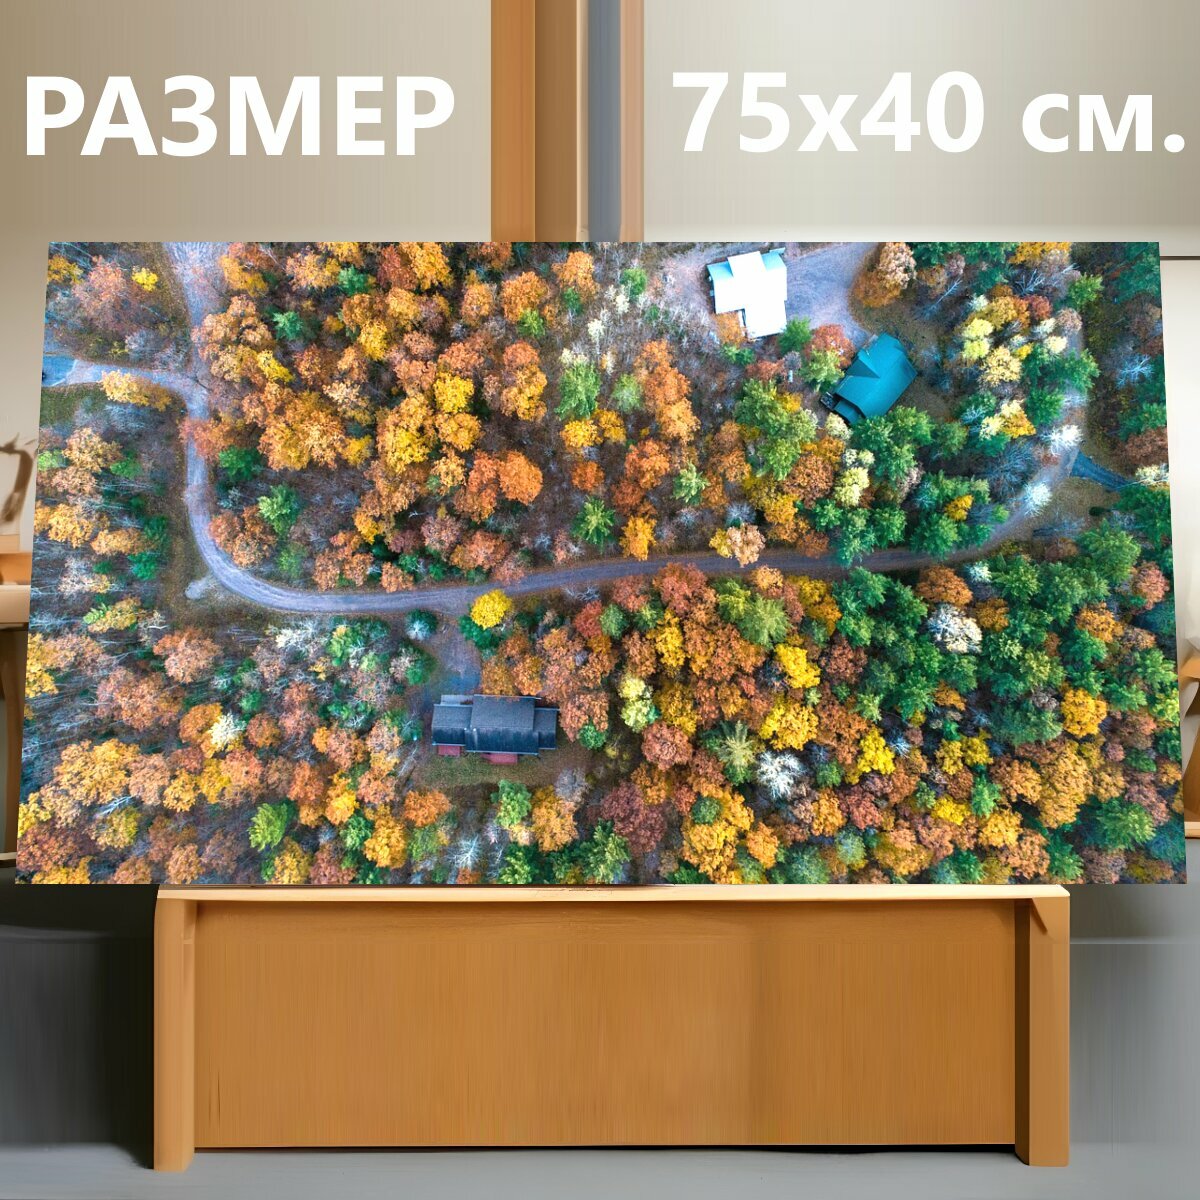 Картина на холсте "Дорога, вид сверху фото, дерево фото" на подрамнике 75х40 см. для интерьера